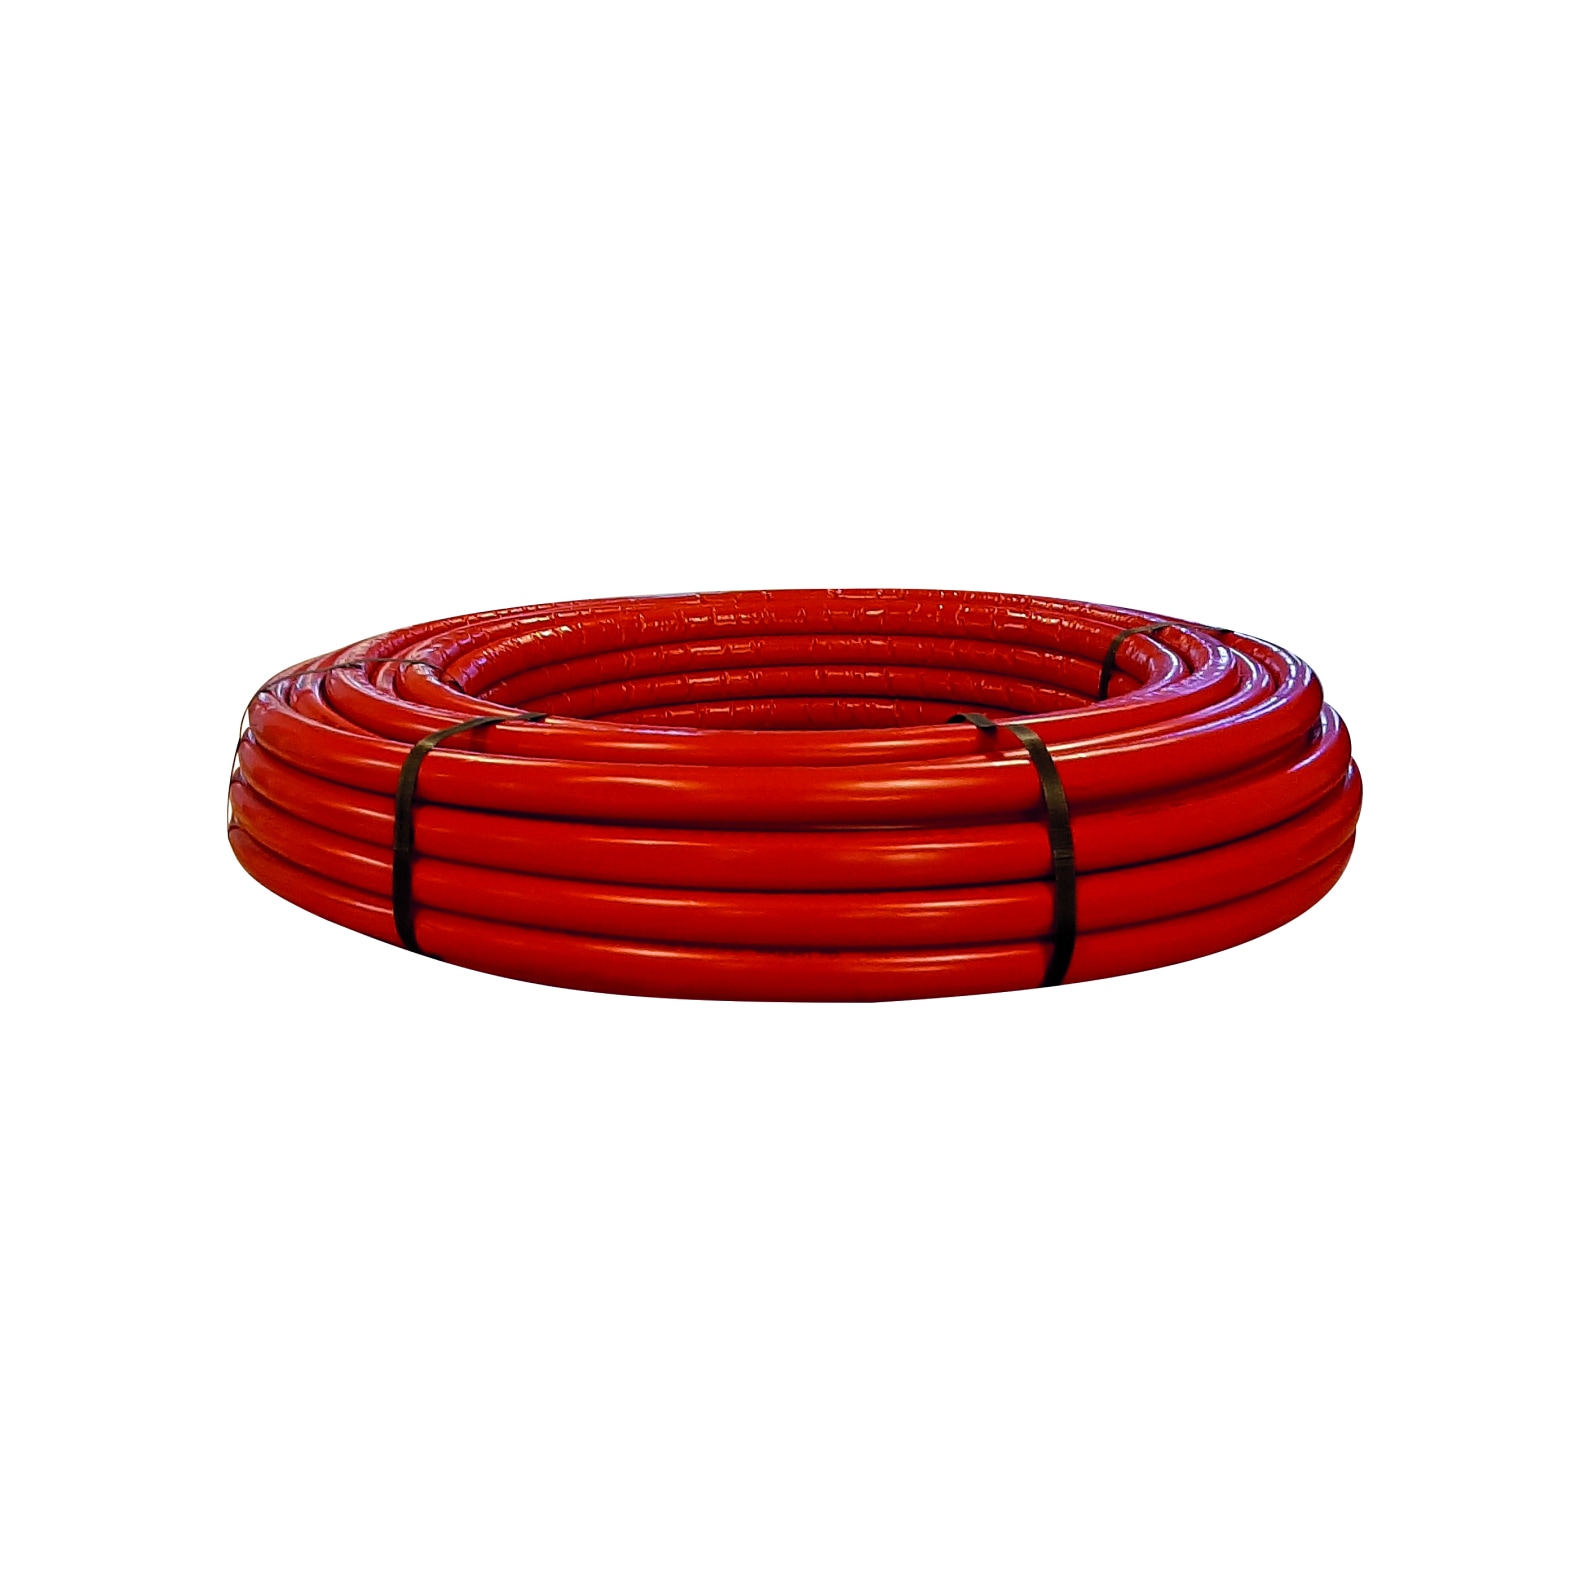 Beumer Bouwshop Uniwarm rood geïsoleerde waterleiding AKB 16x2mm 50 meter